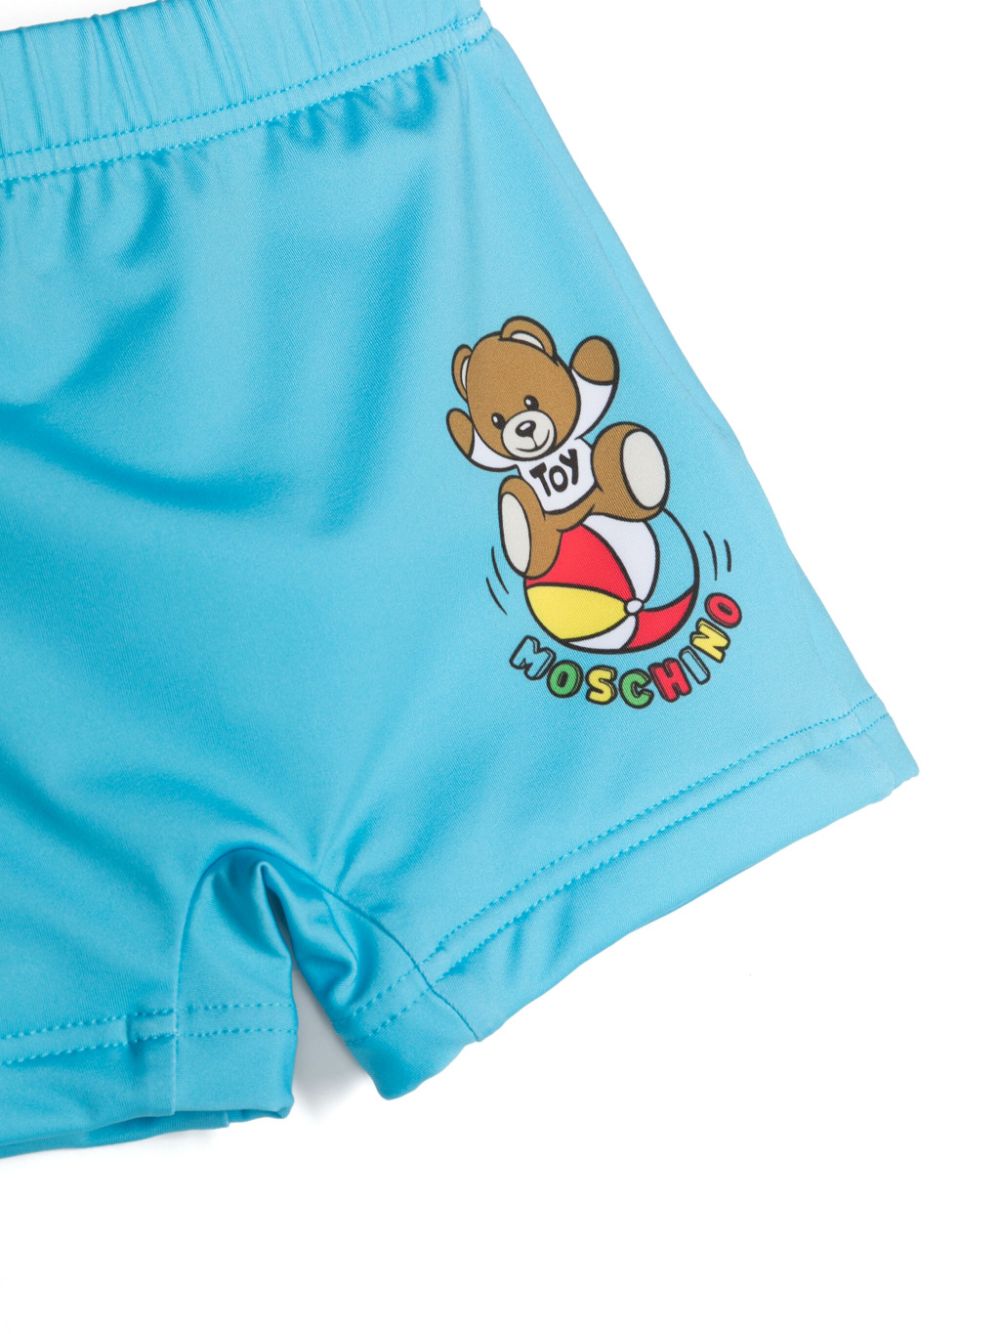 Light blue baby swim shorts with logo